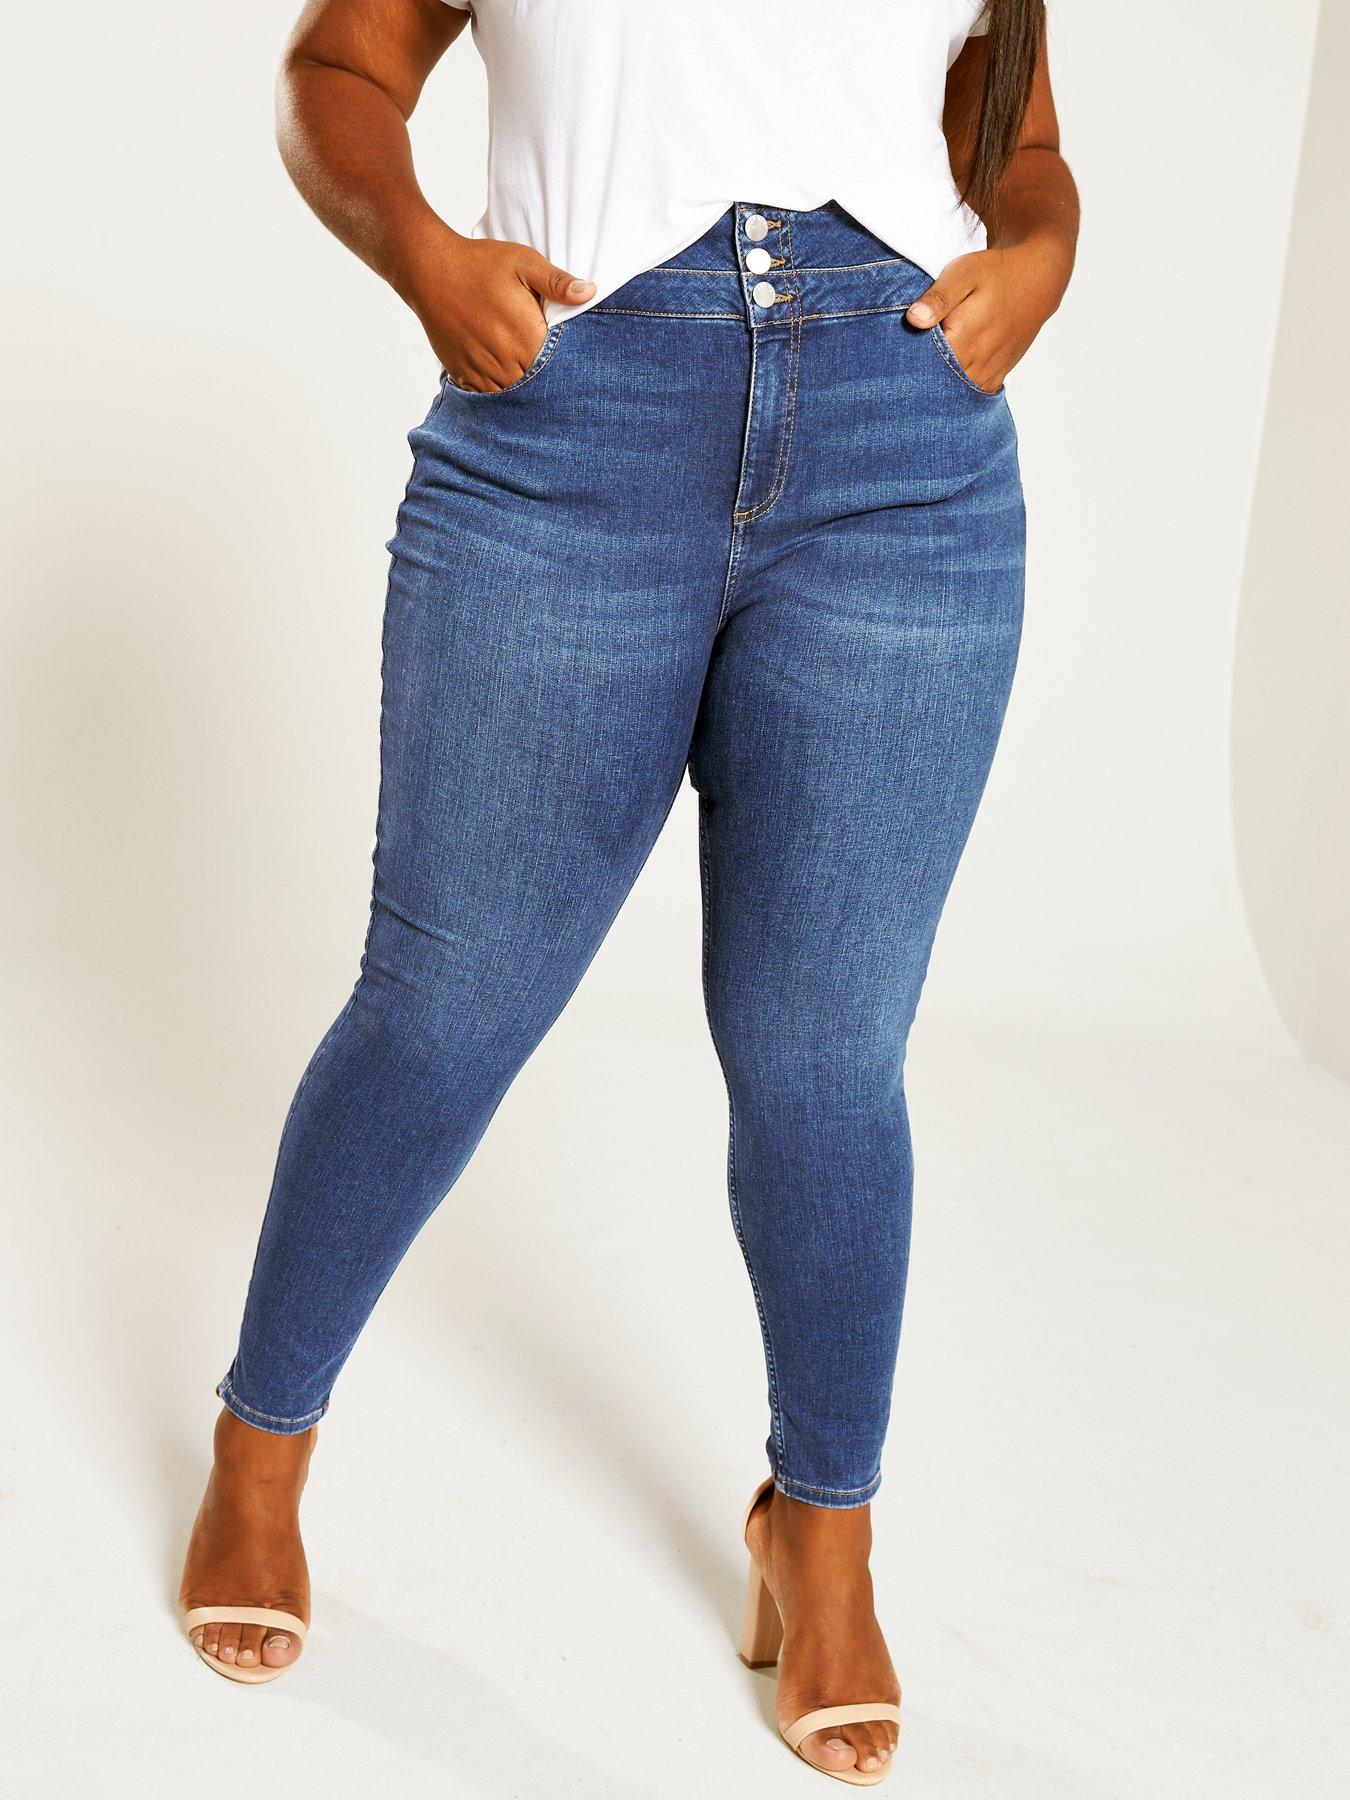 high waisted jeans ireland